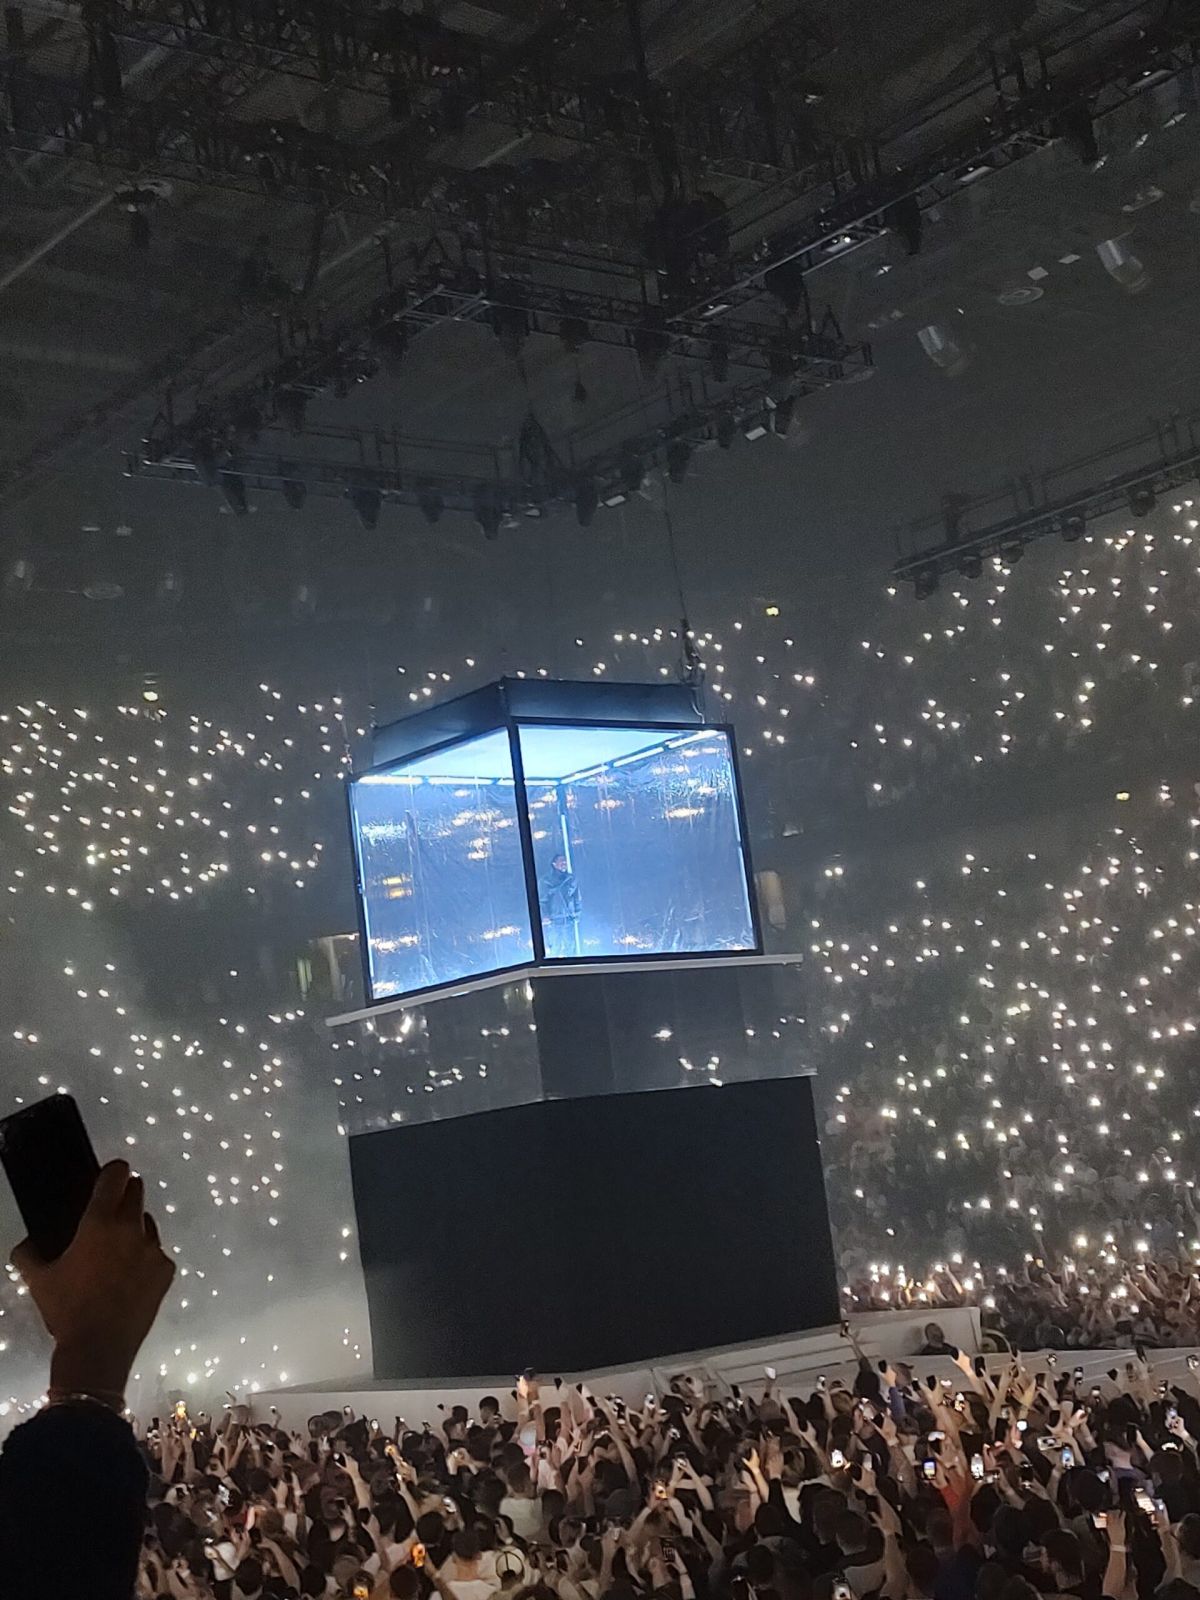 Live review: Kendrick Lamar at AO Arena, Manchester